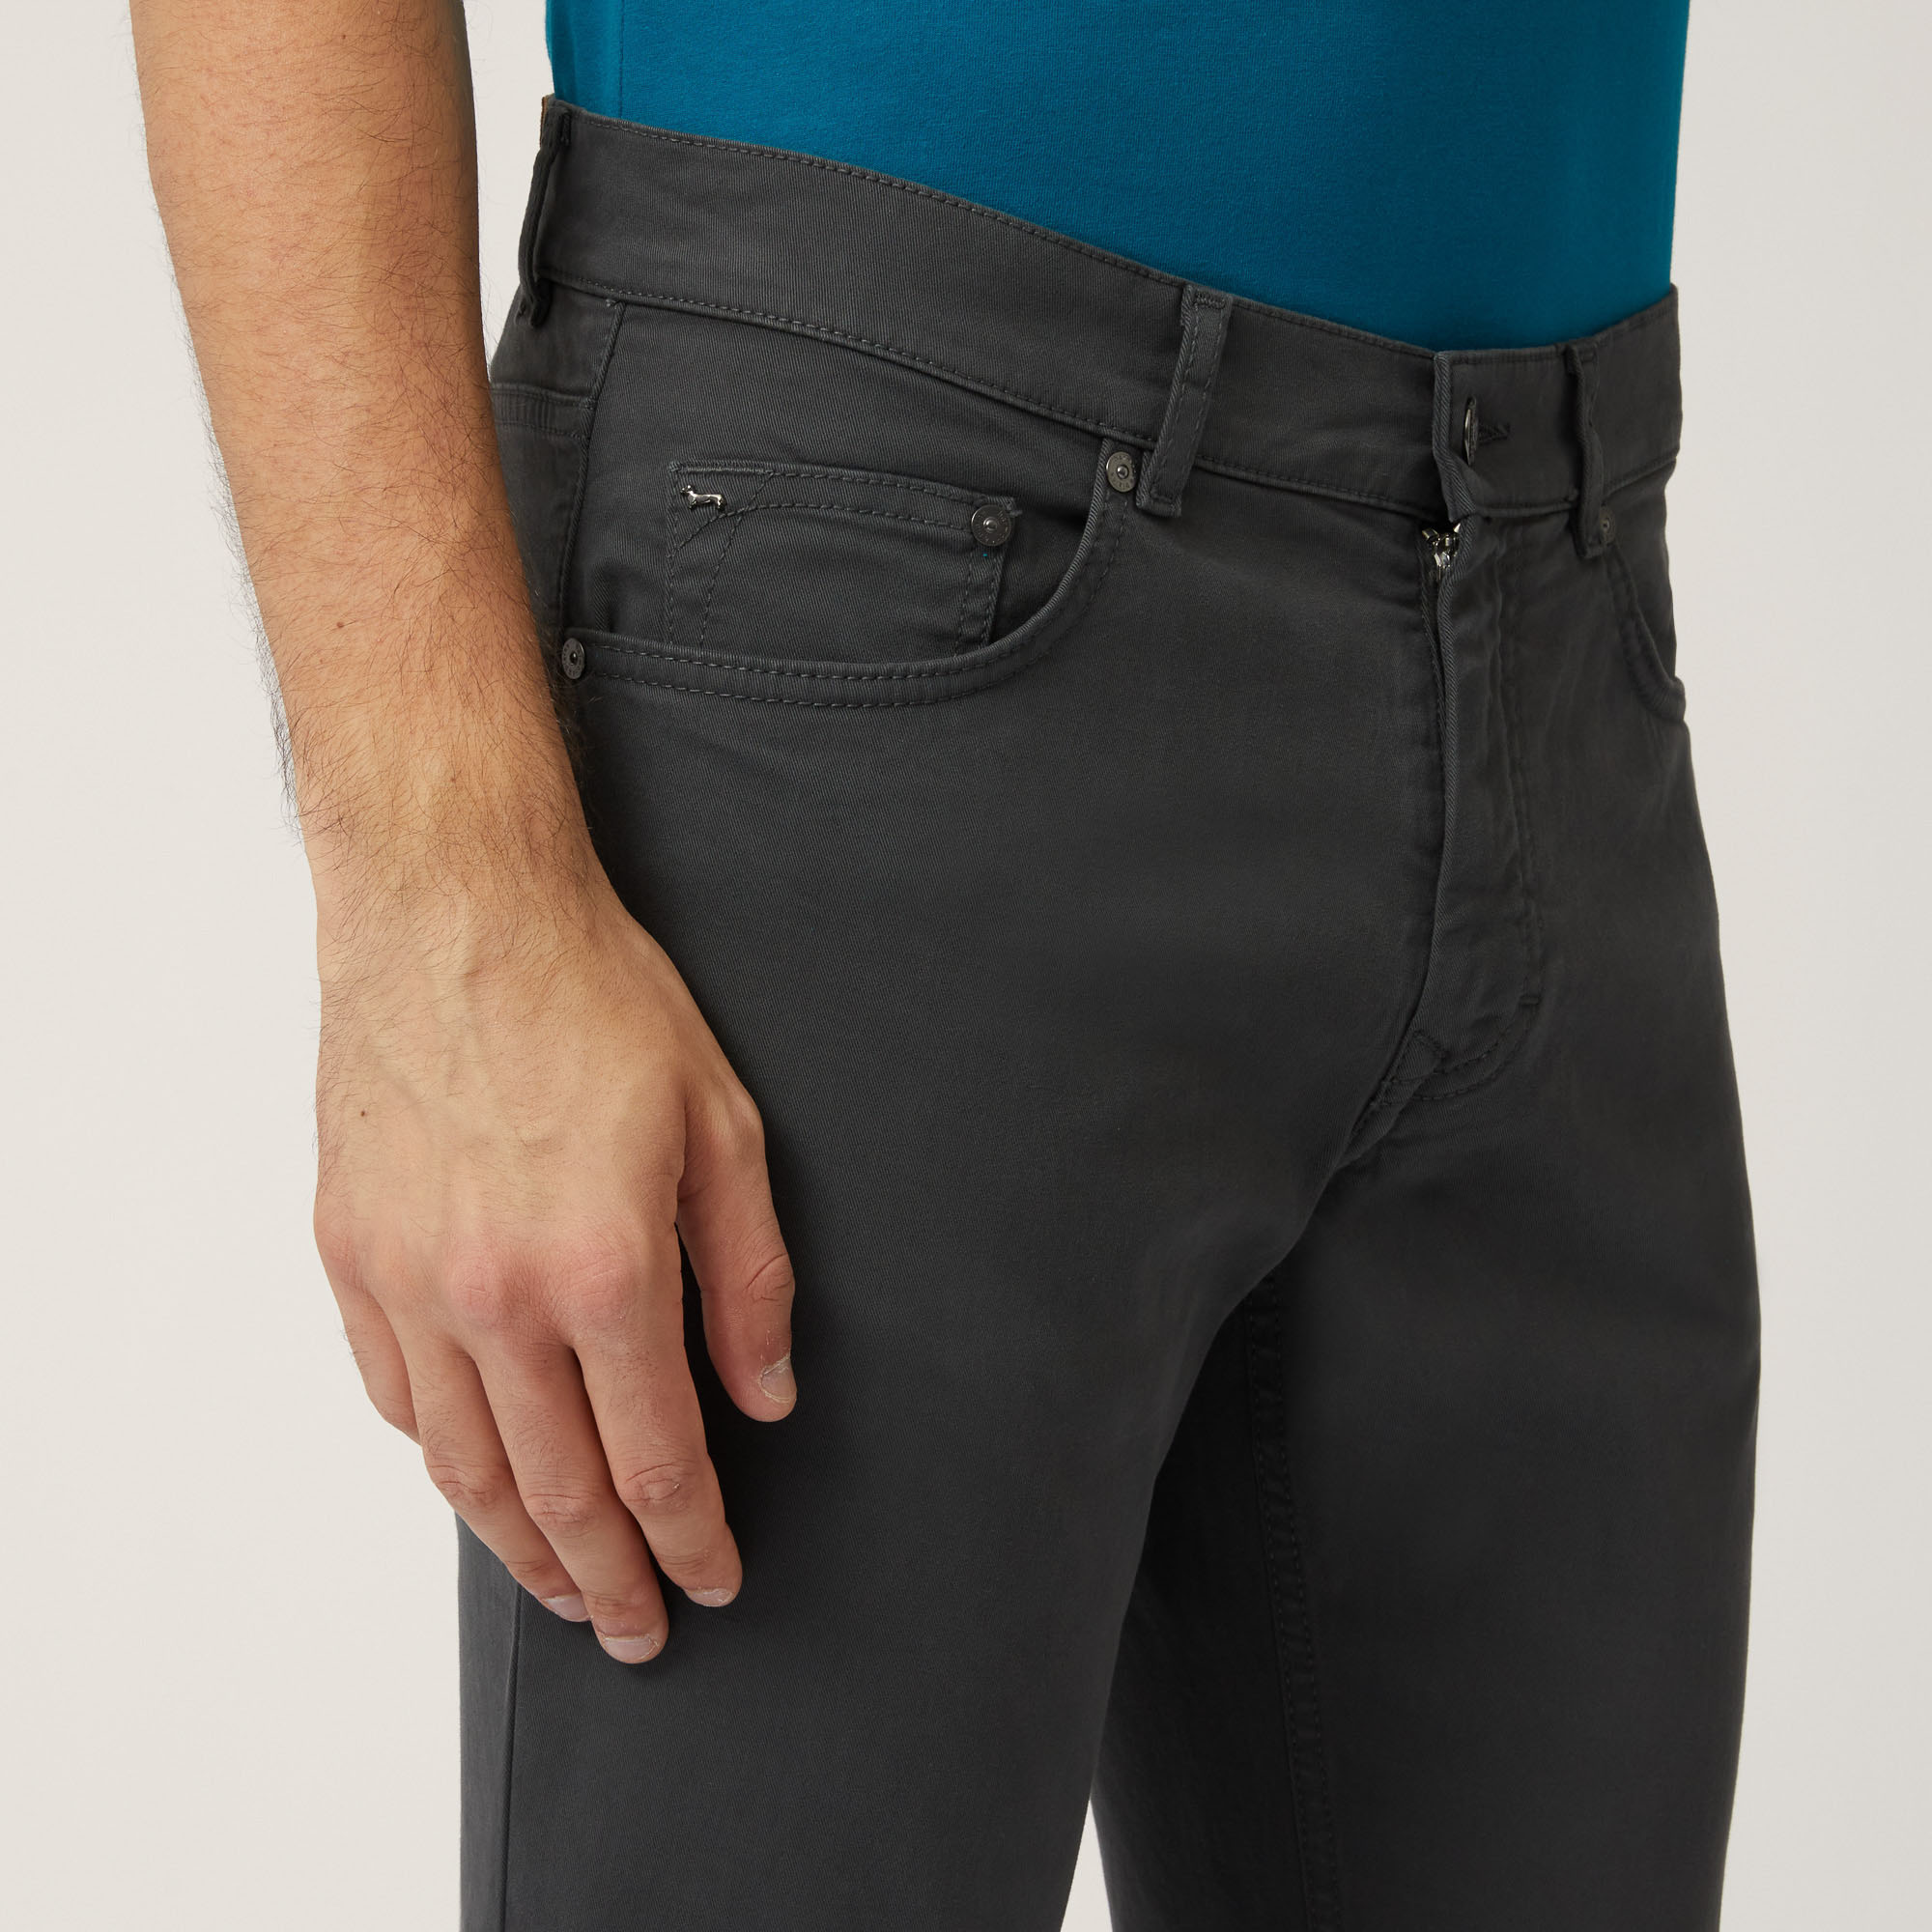 Elevate Dutility Five-Pocket Stretch Cotton Pants, Gray, large